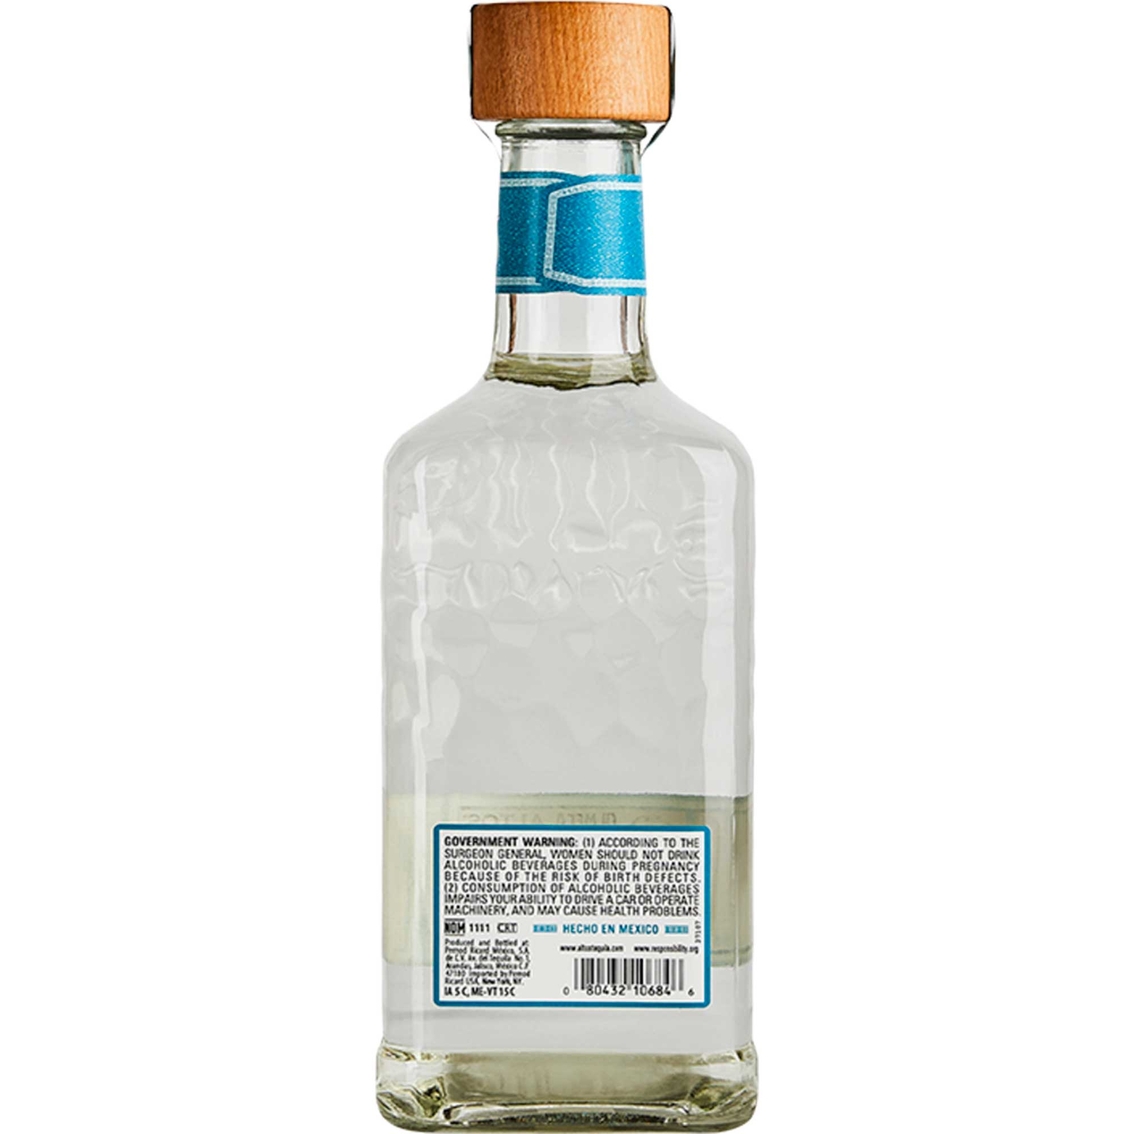 Olmeca Altos Plata Tequila 750ml - Image 2 of 2